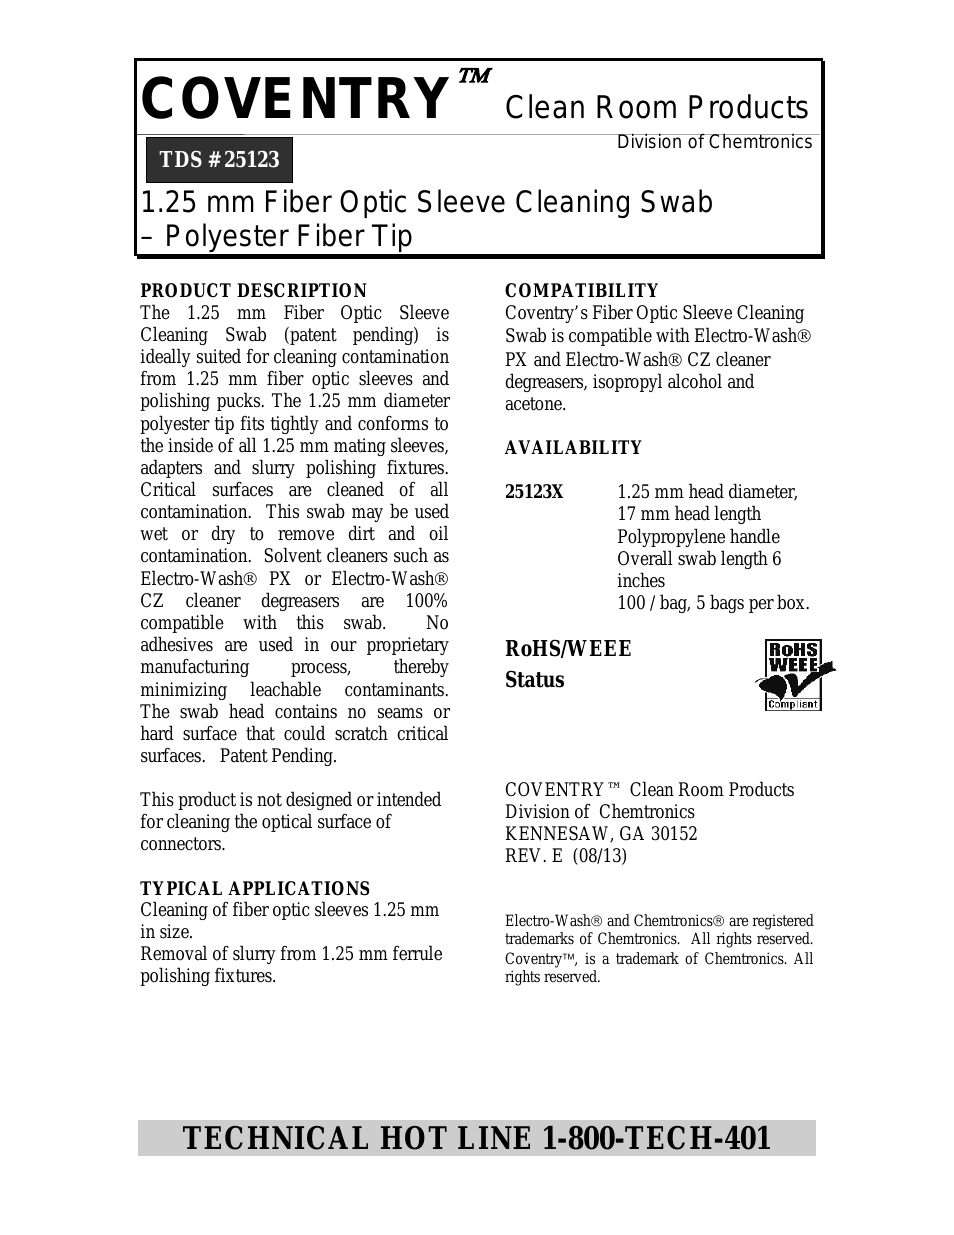 1.25mm Fiber Optic Sleeve Cleaning Swab 25123X